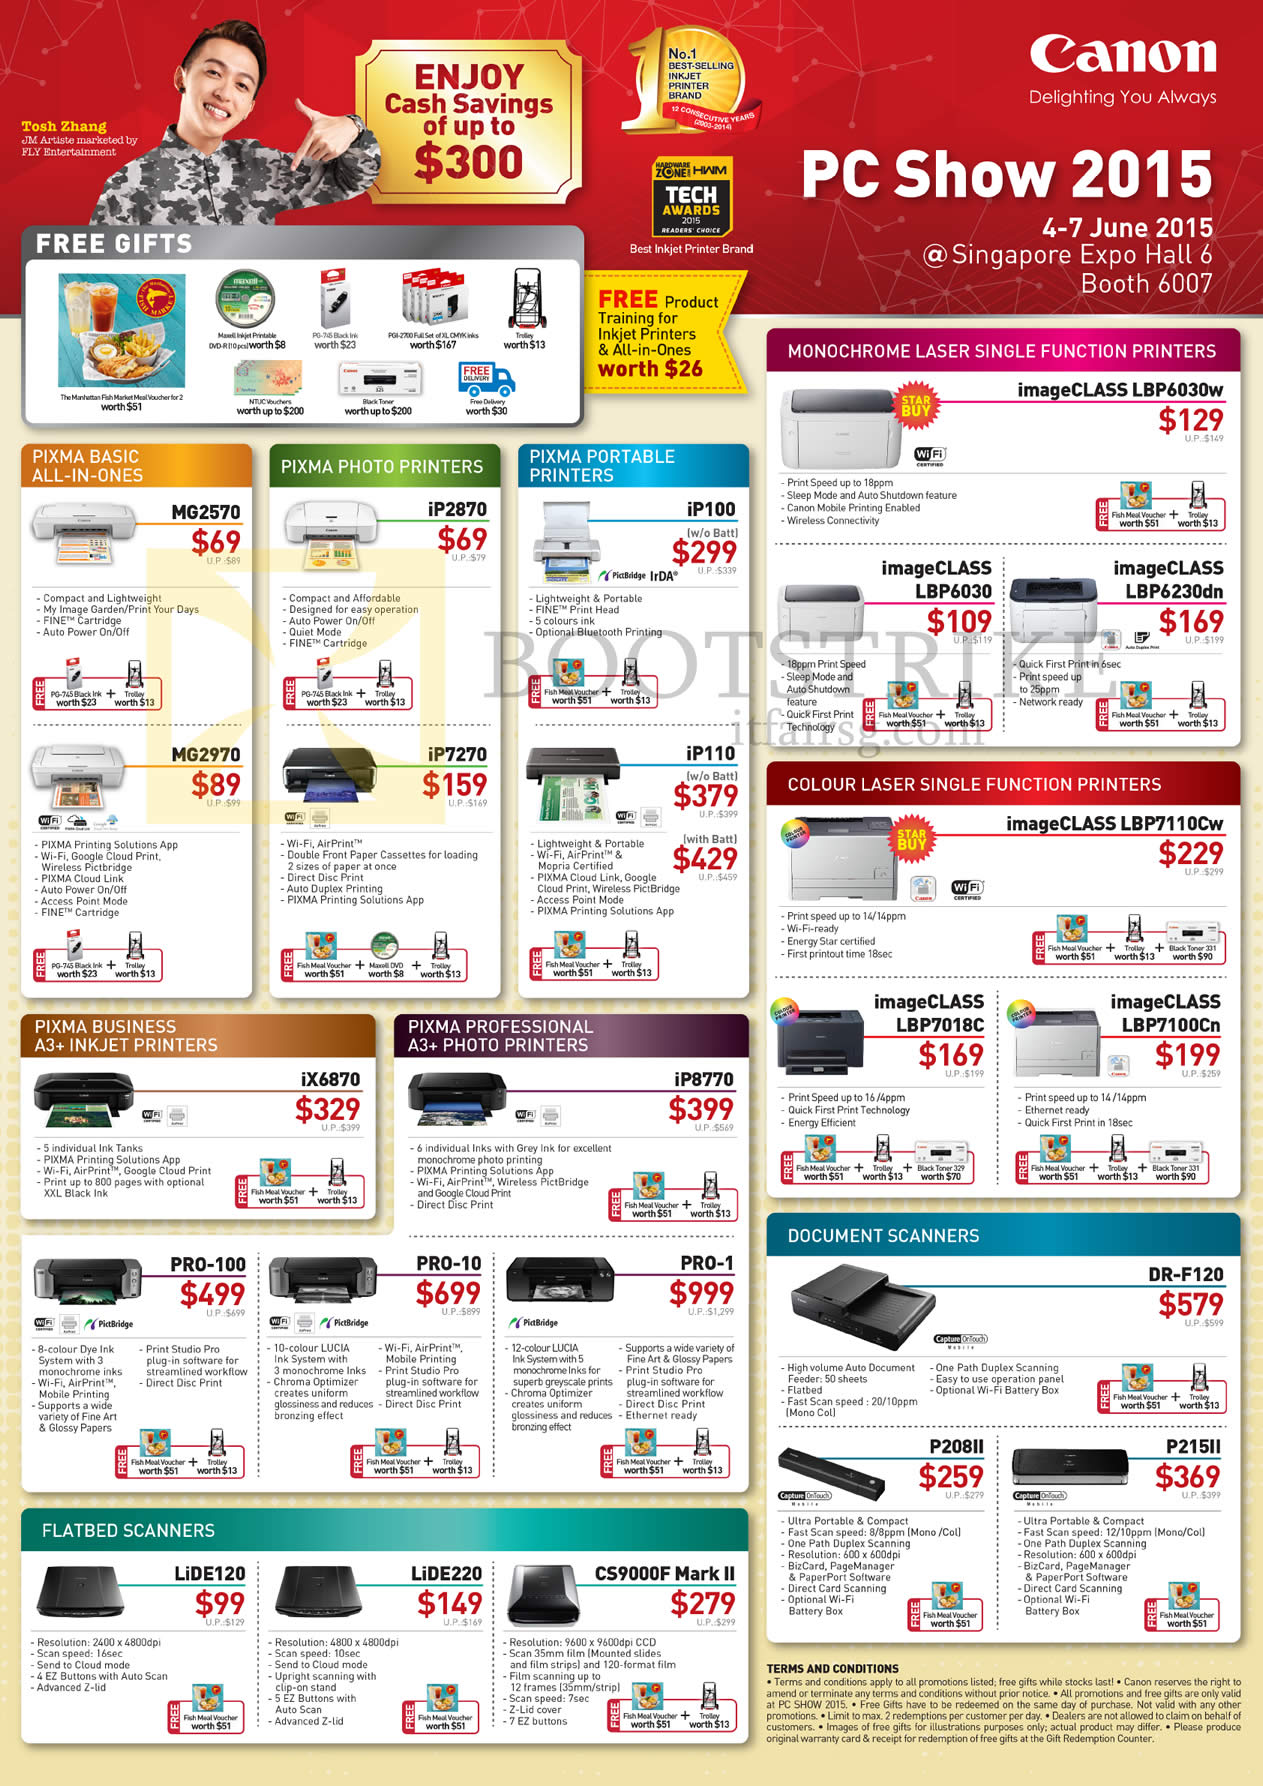 PC SHOW 2015 price list image brochure of Canon Printers Pixma Photo, Portable, ImageClass Laser, Business, Professional, Scanners